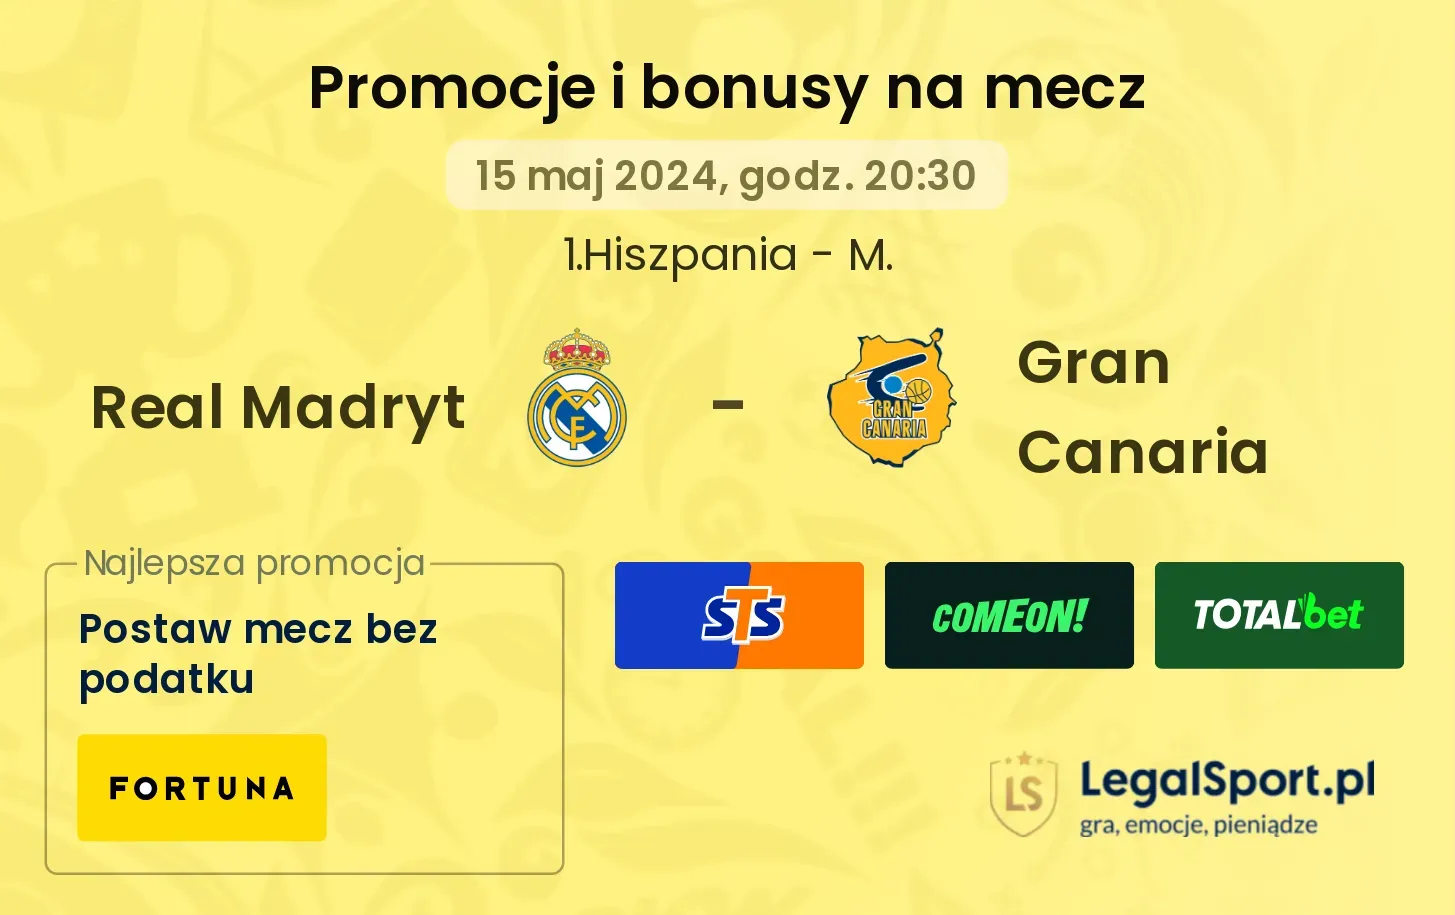 Real Madryt - Gran Canaria bonusy i promocje (15.05, 20:30)